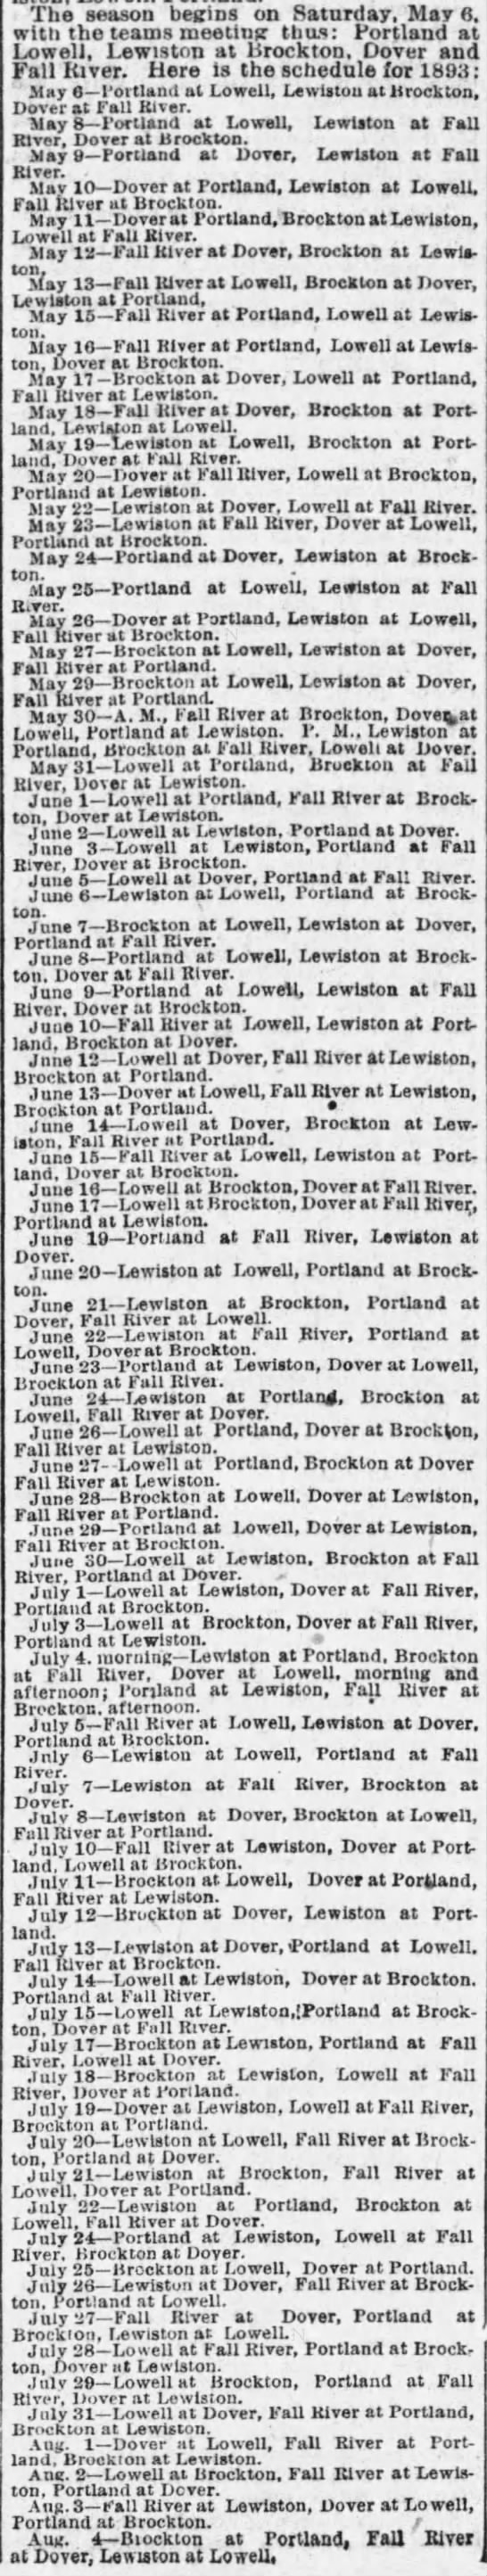 1893 New England League schedule - 